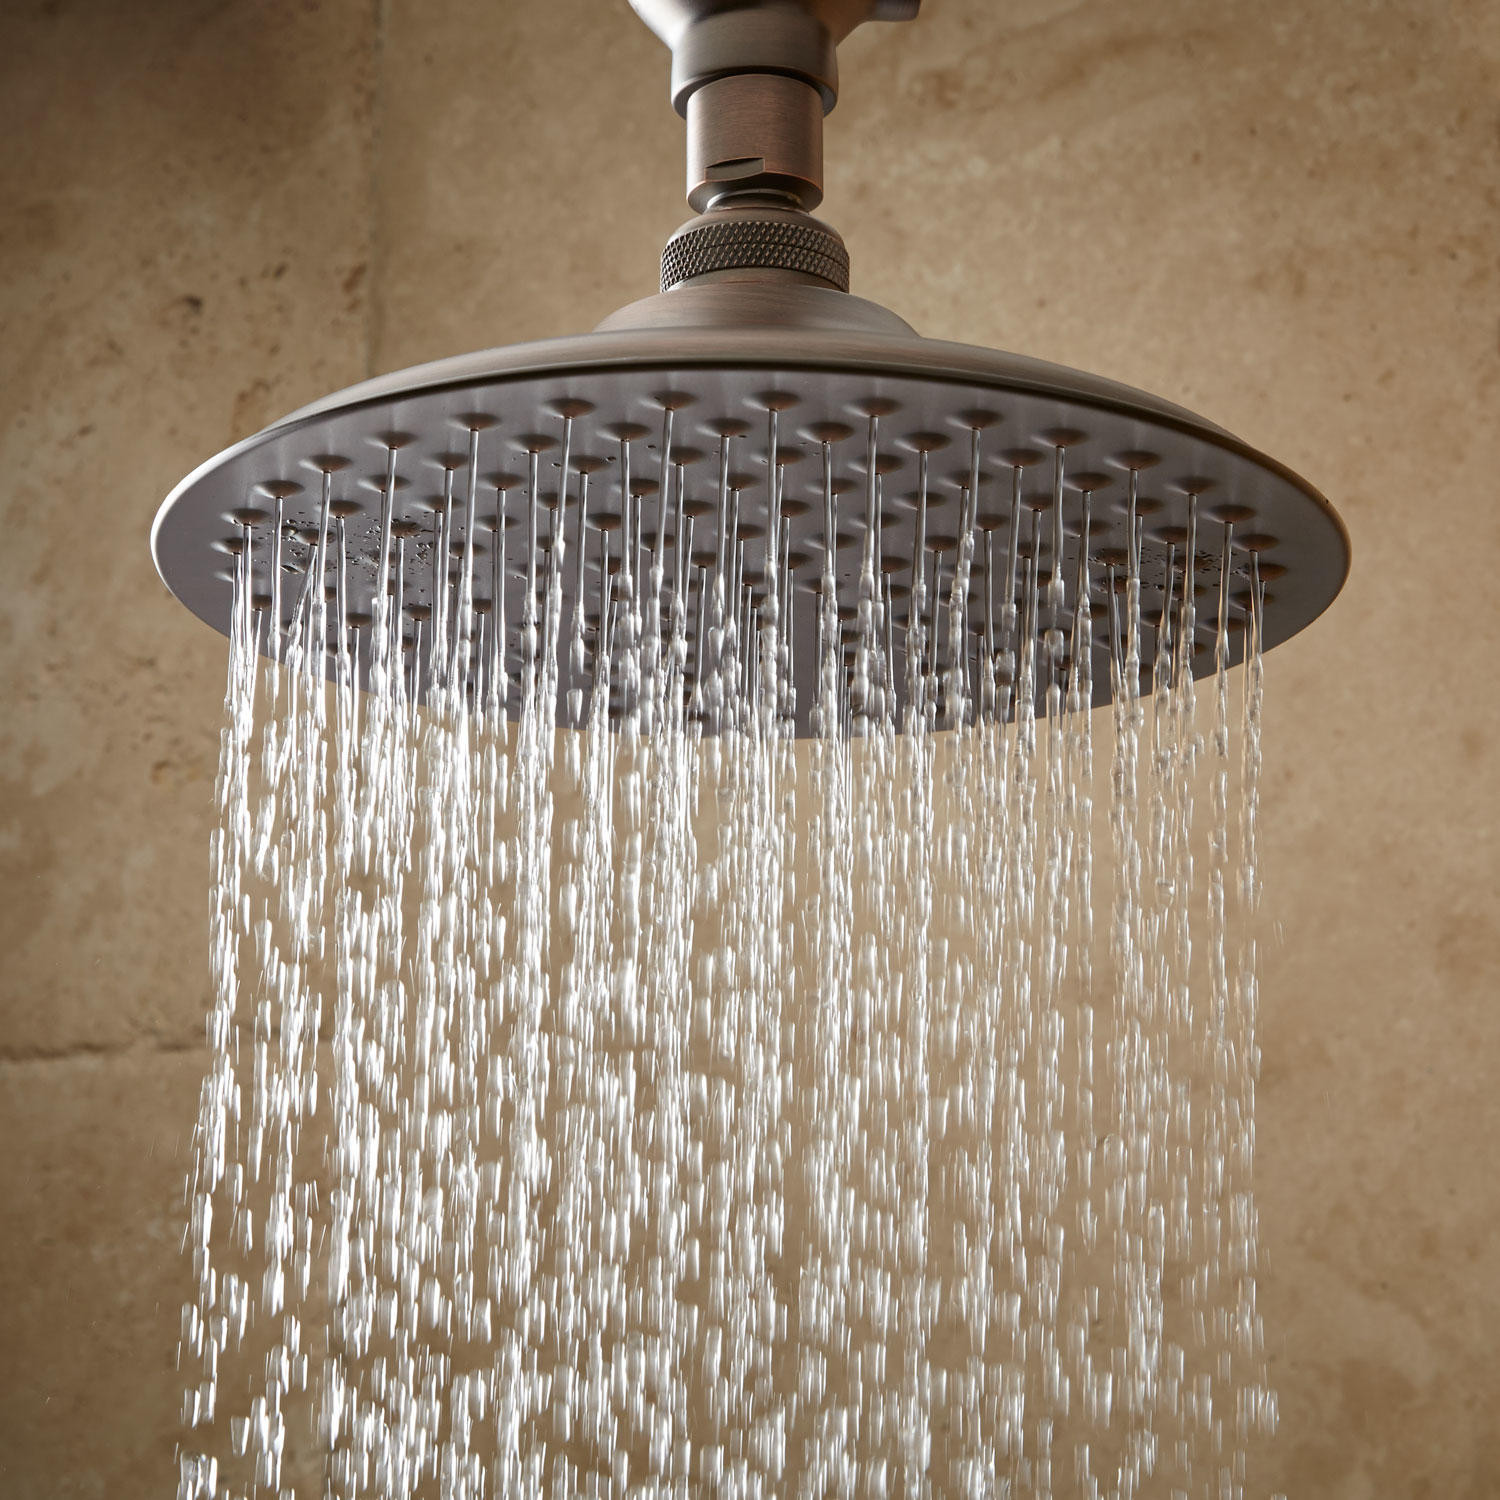 Bathroom Shower Head Luxury Bostonian Rainfall Shower Head with S Type Arm Bathroom